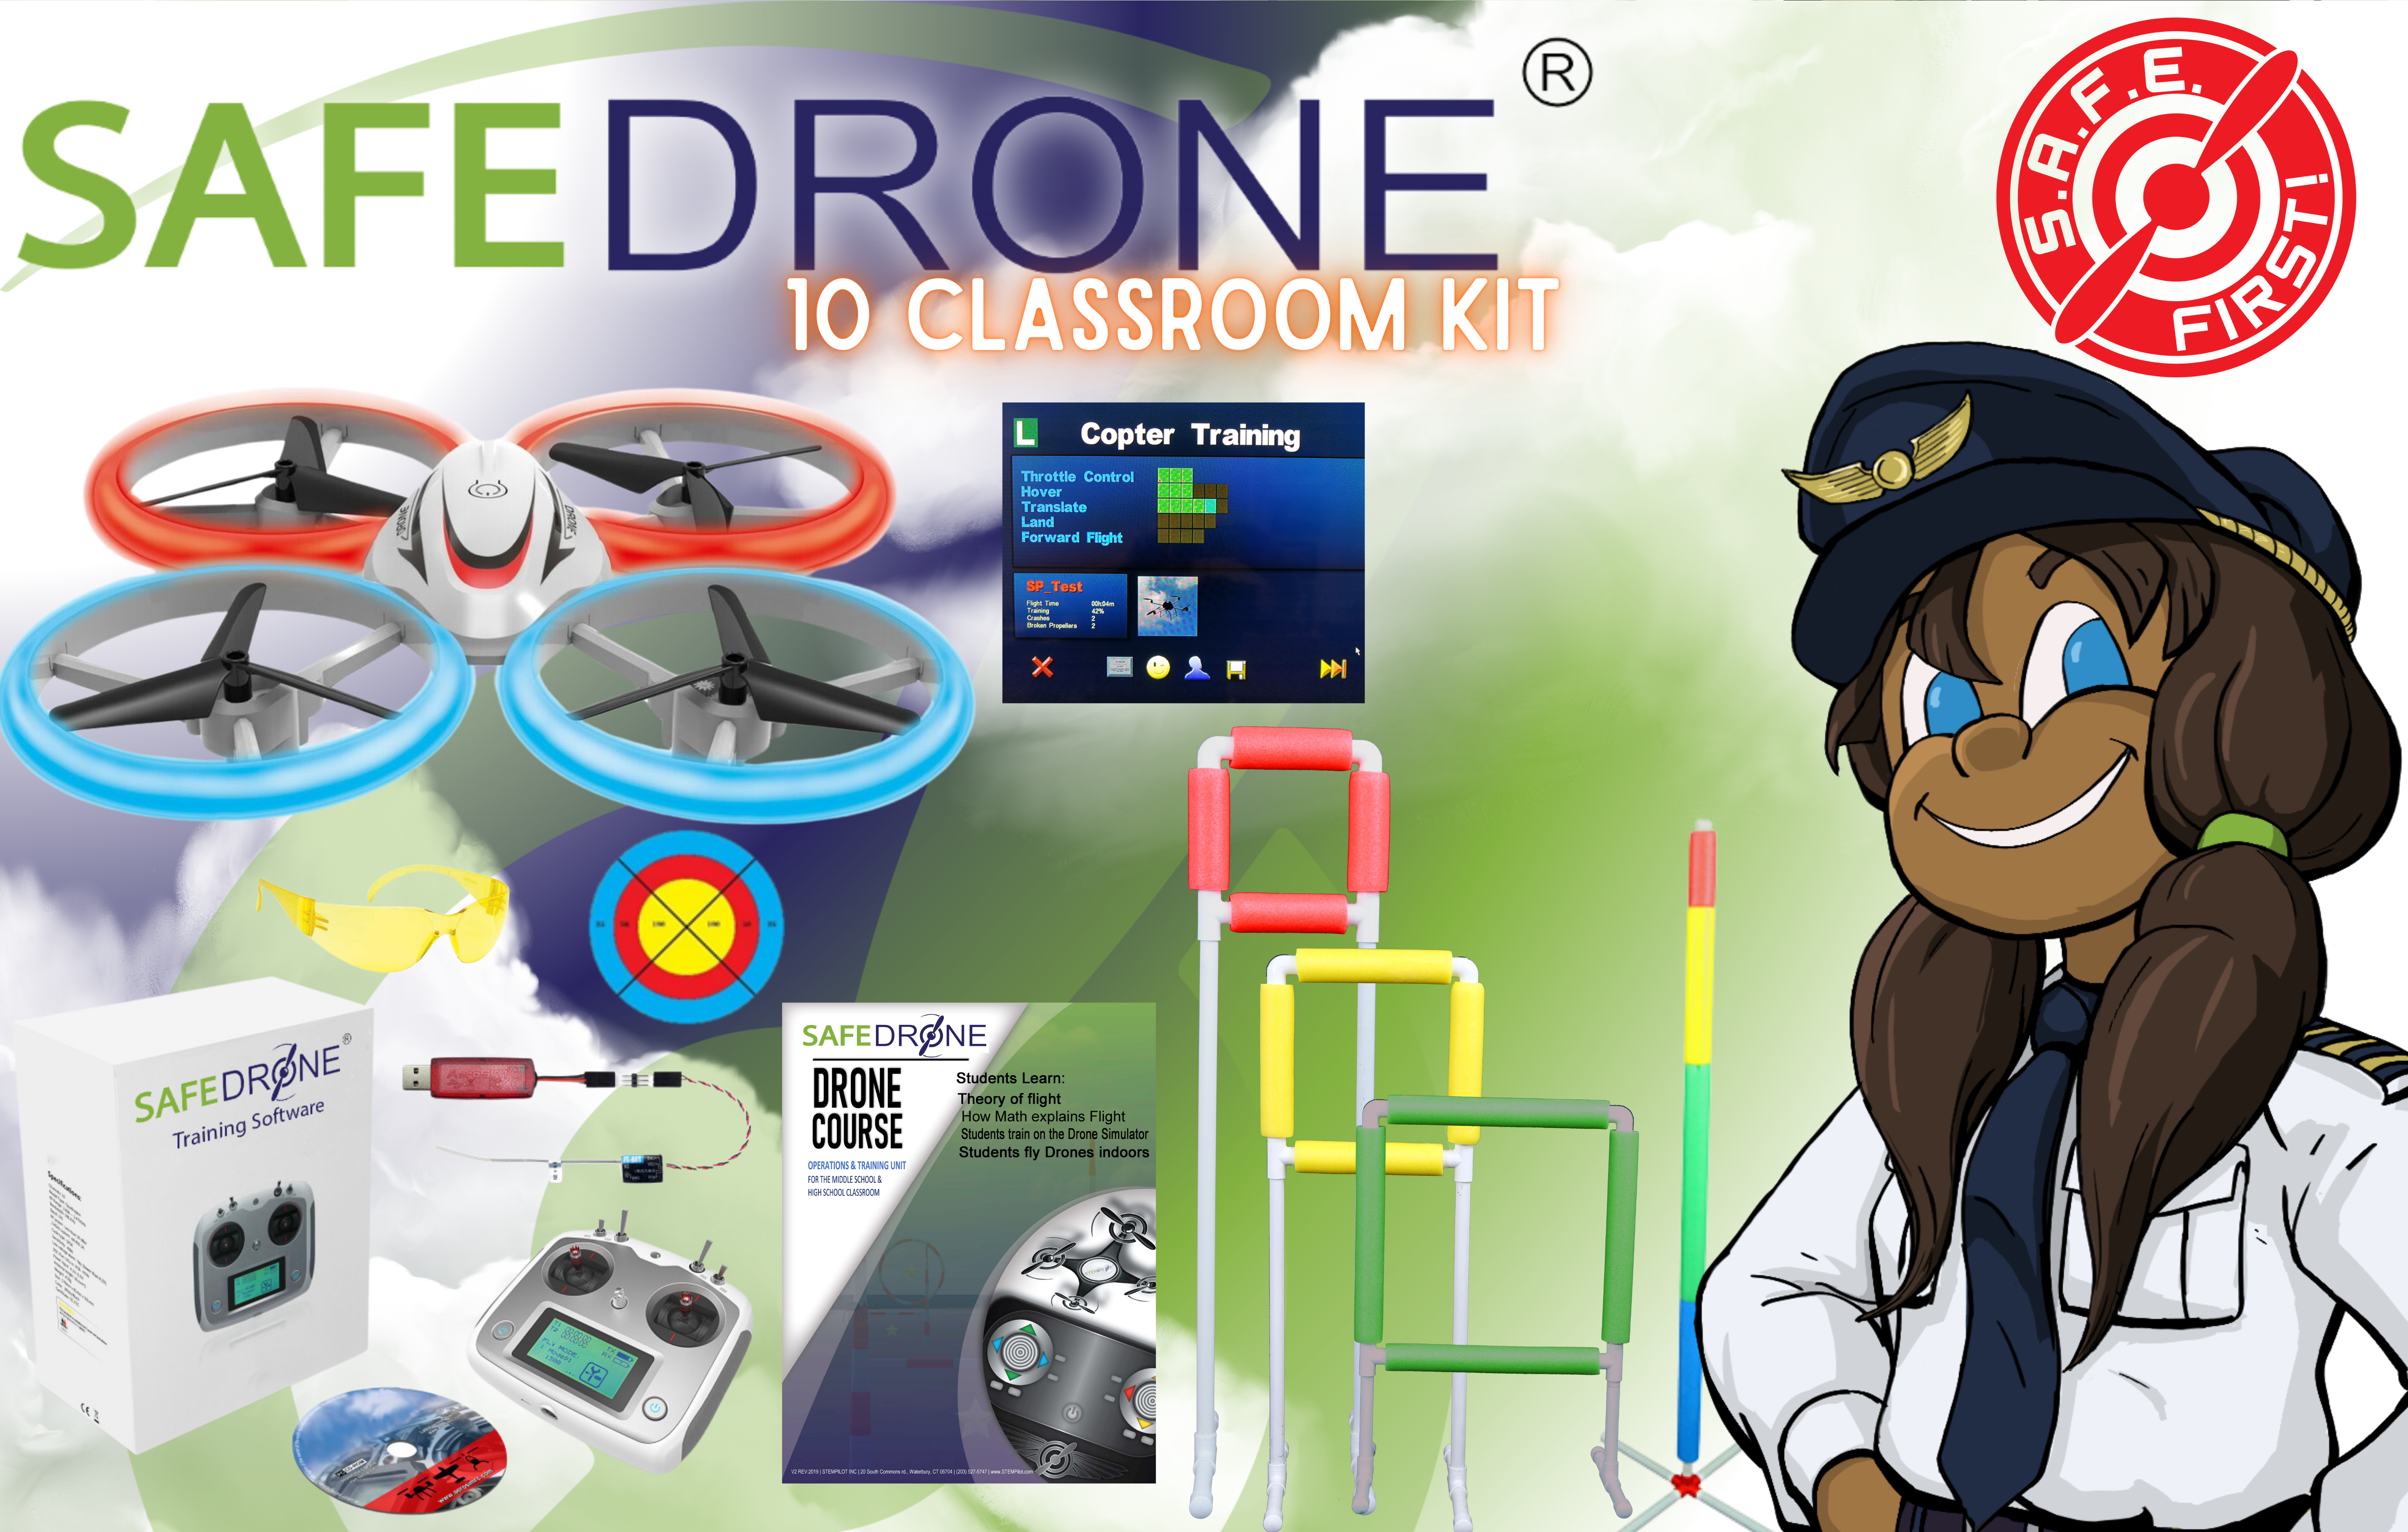 SAFEDrone Classroom 10 Kit Image